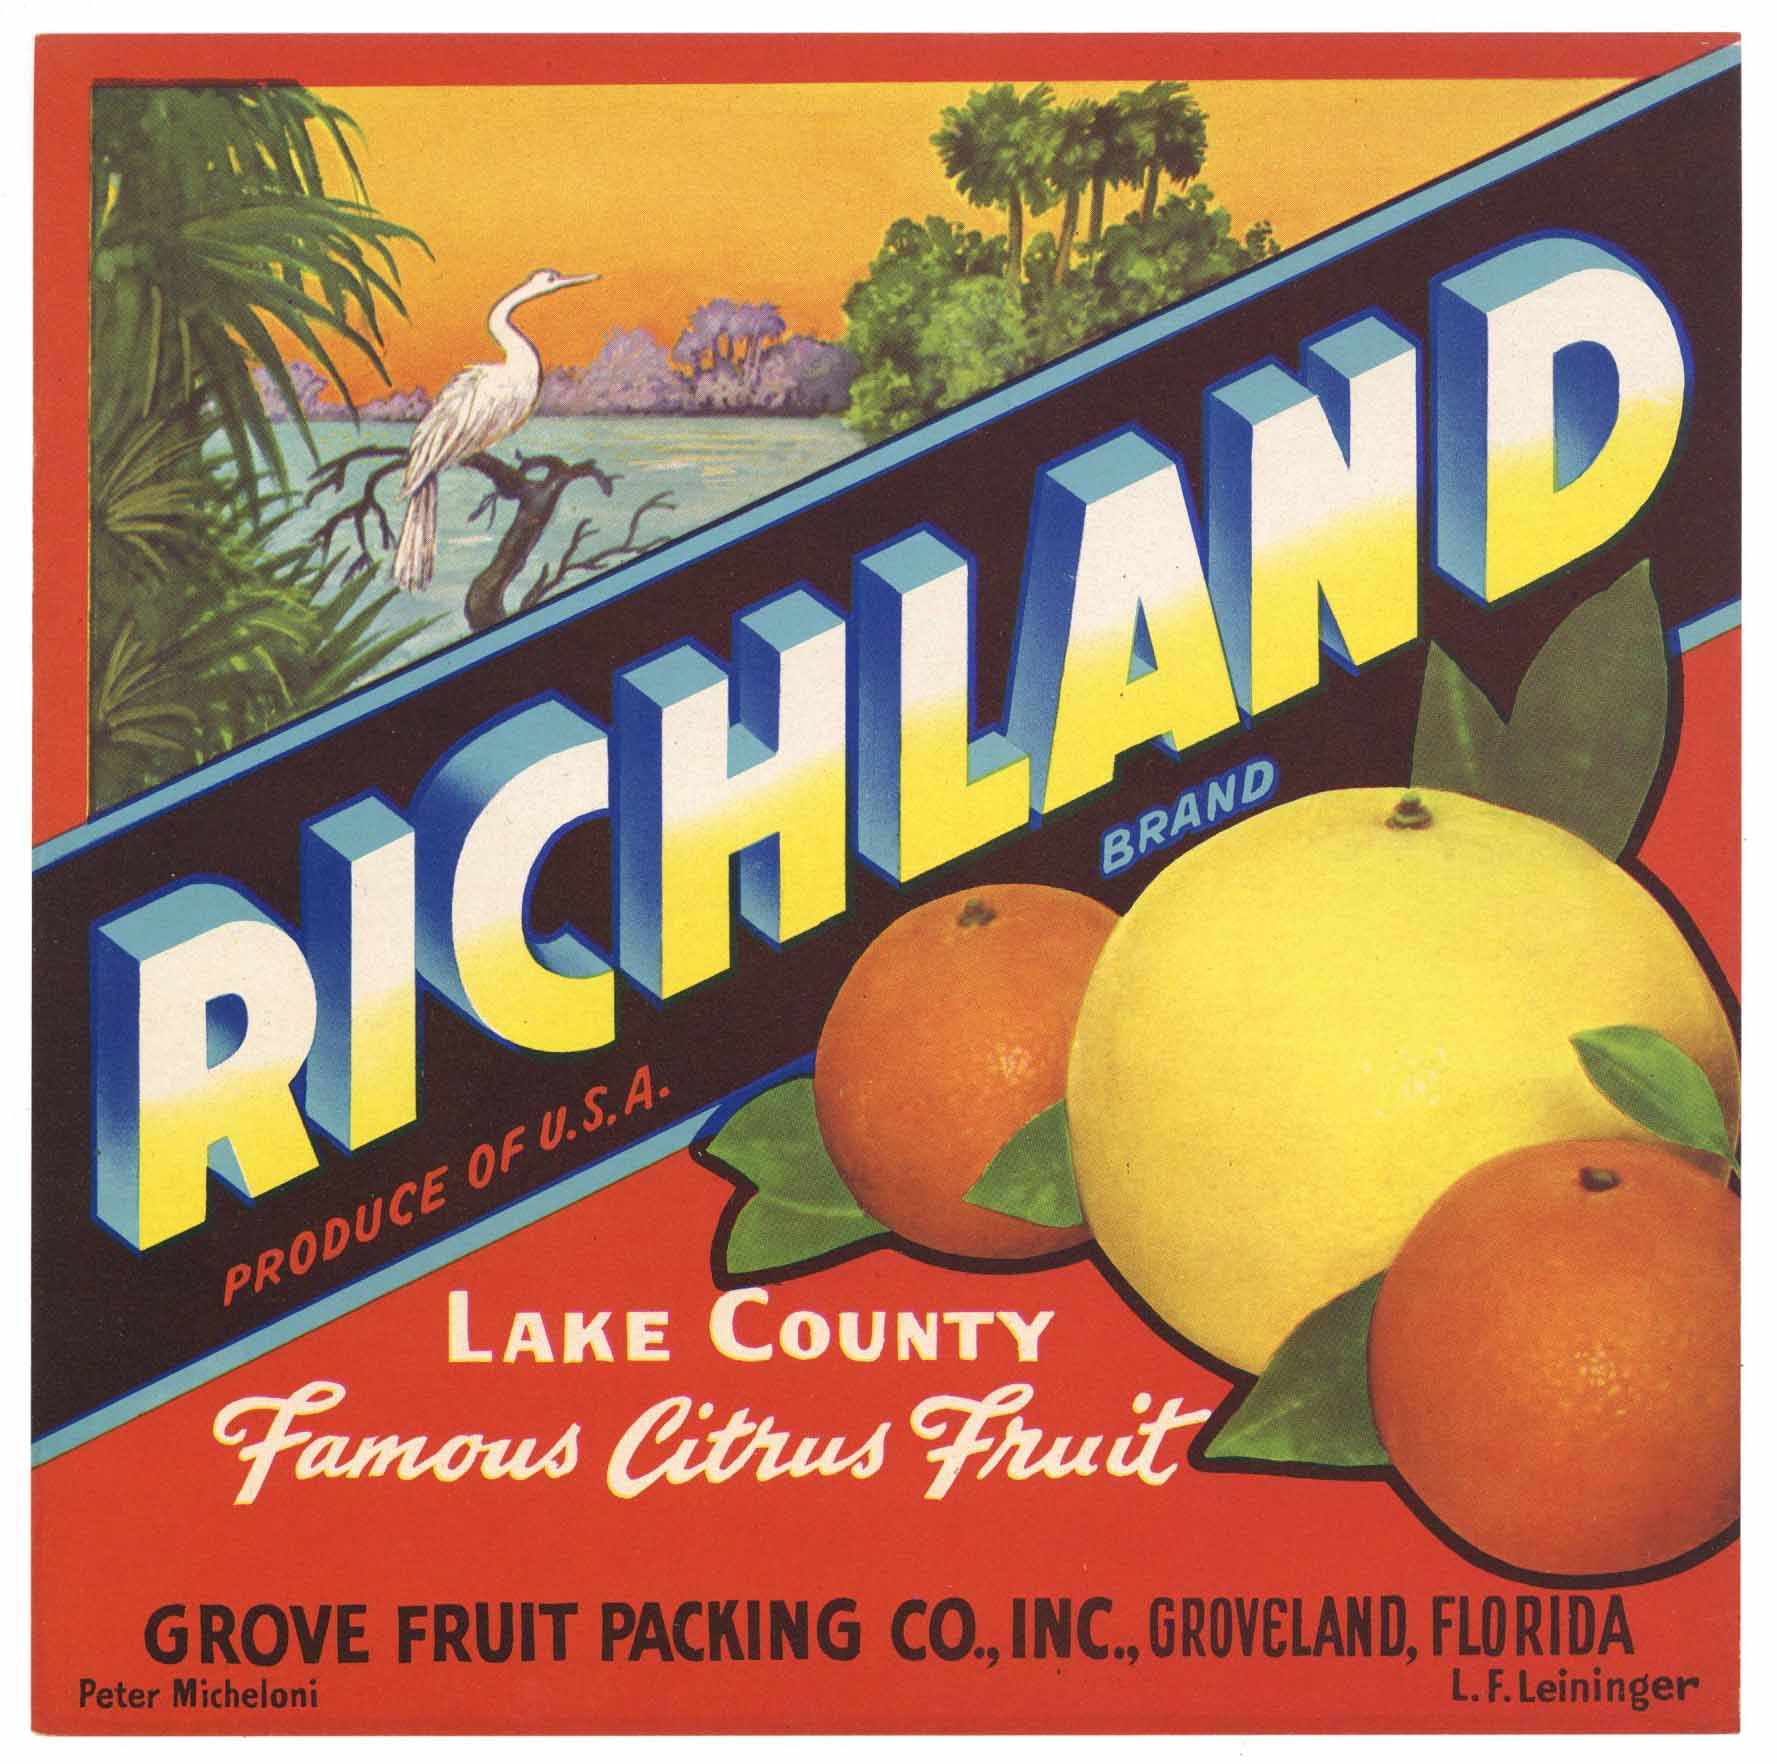 Richland Brand Vintage Groveland Florida Citrus Crate Label